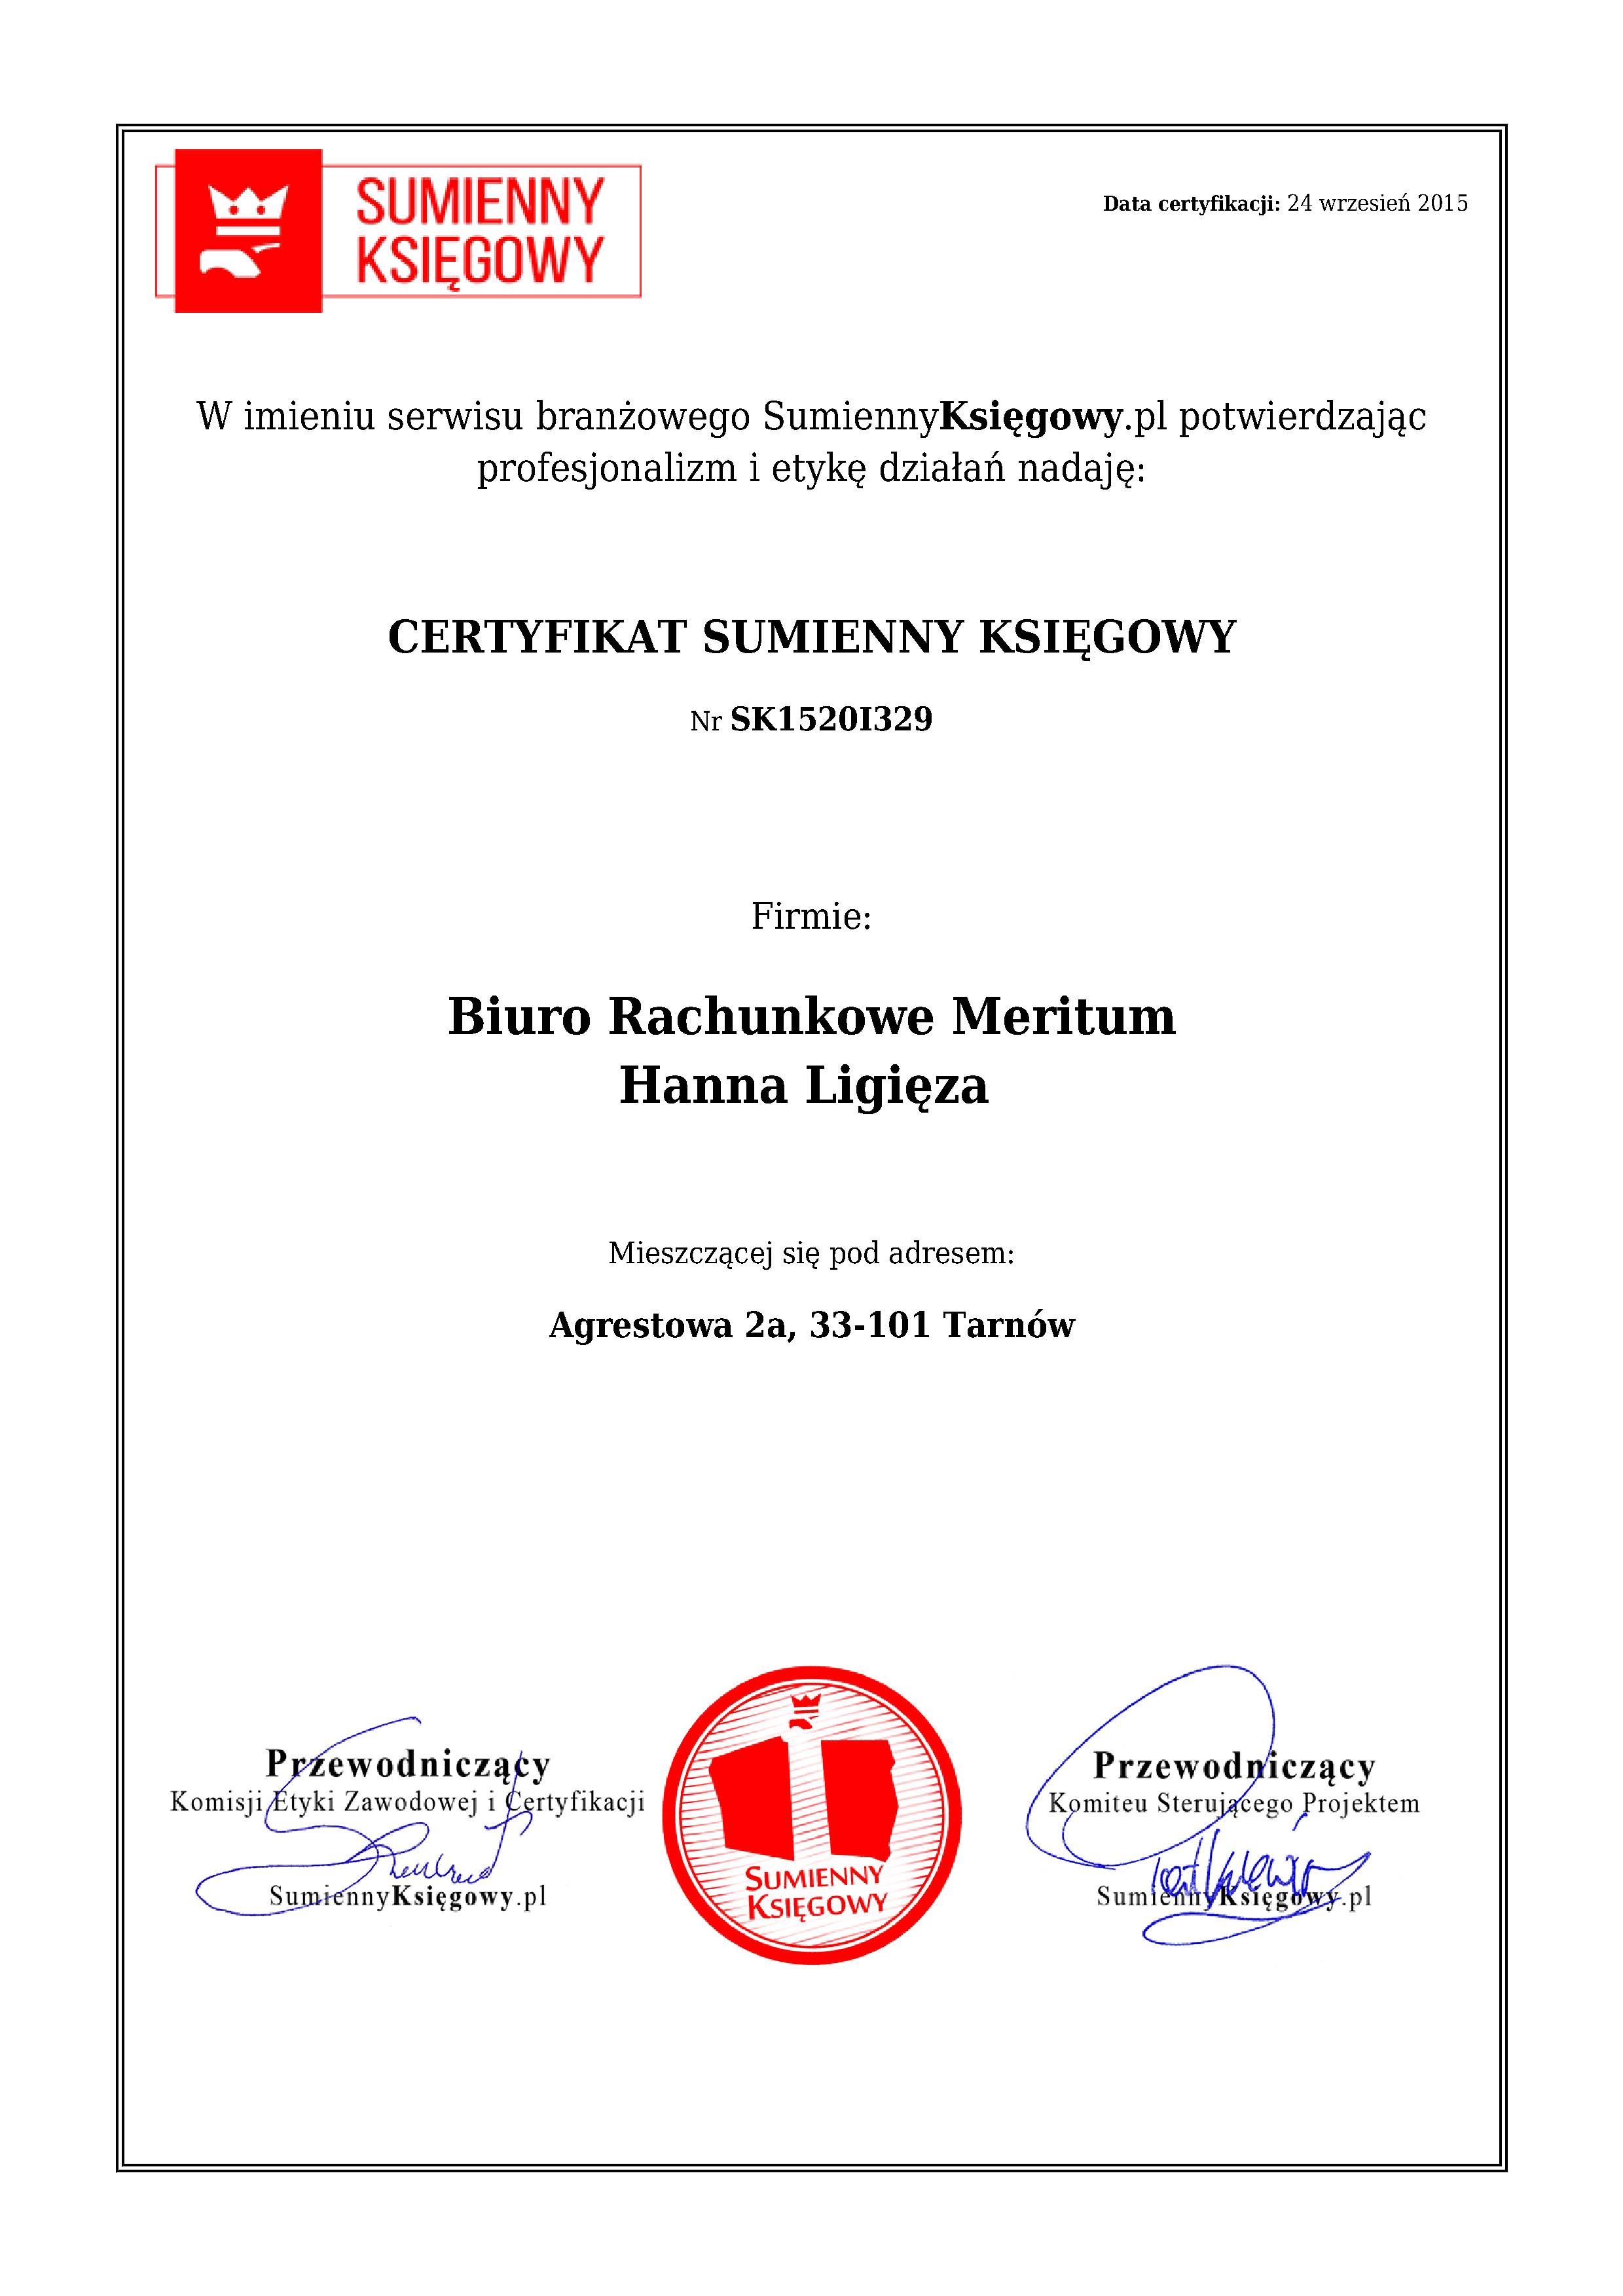 Biuro Rachunkowe Meritum Hanna Ligięza  certyfikat 1